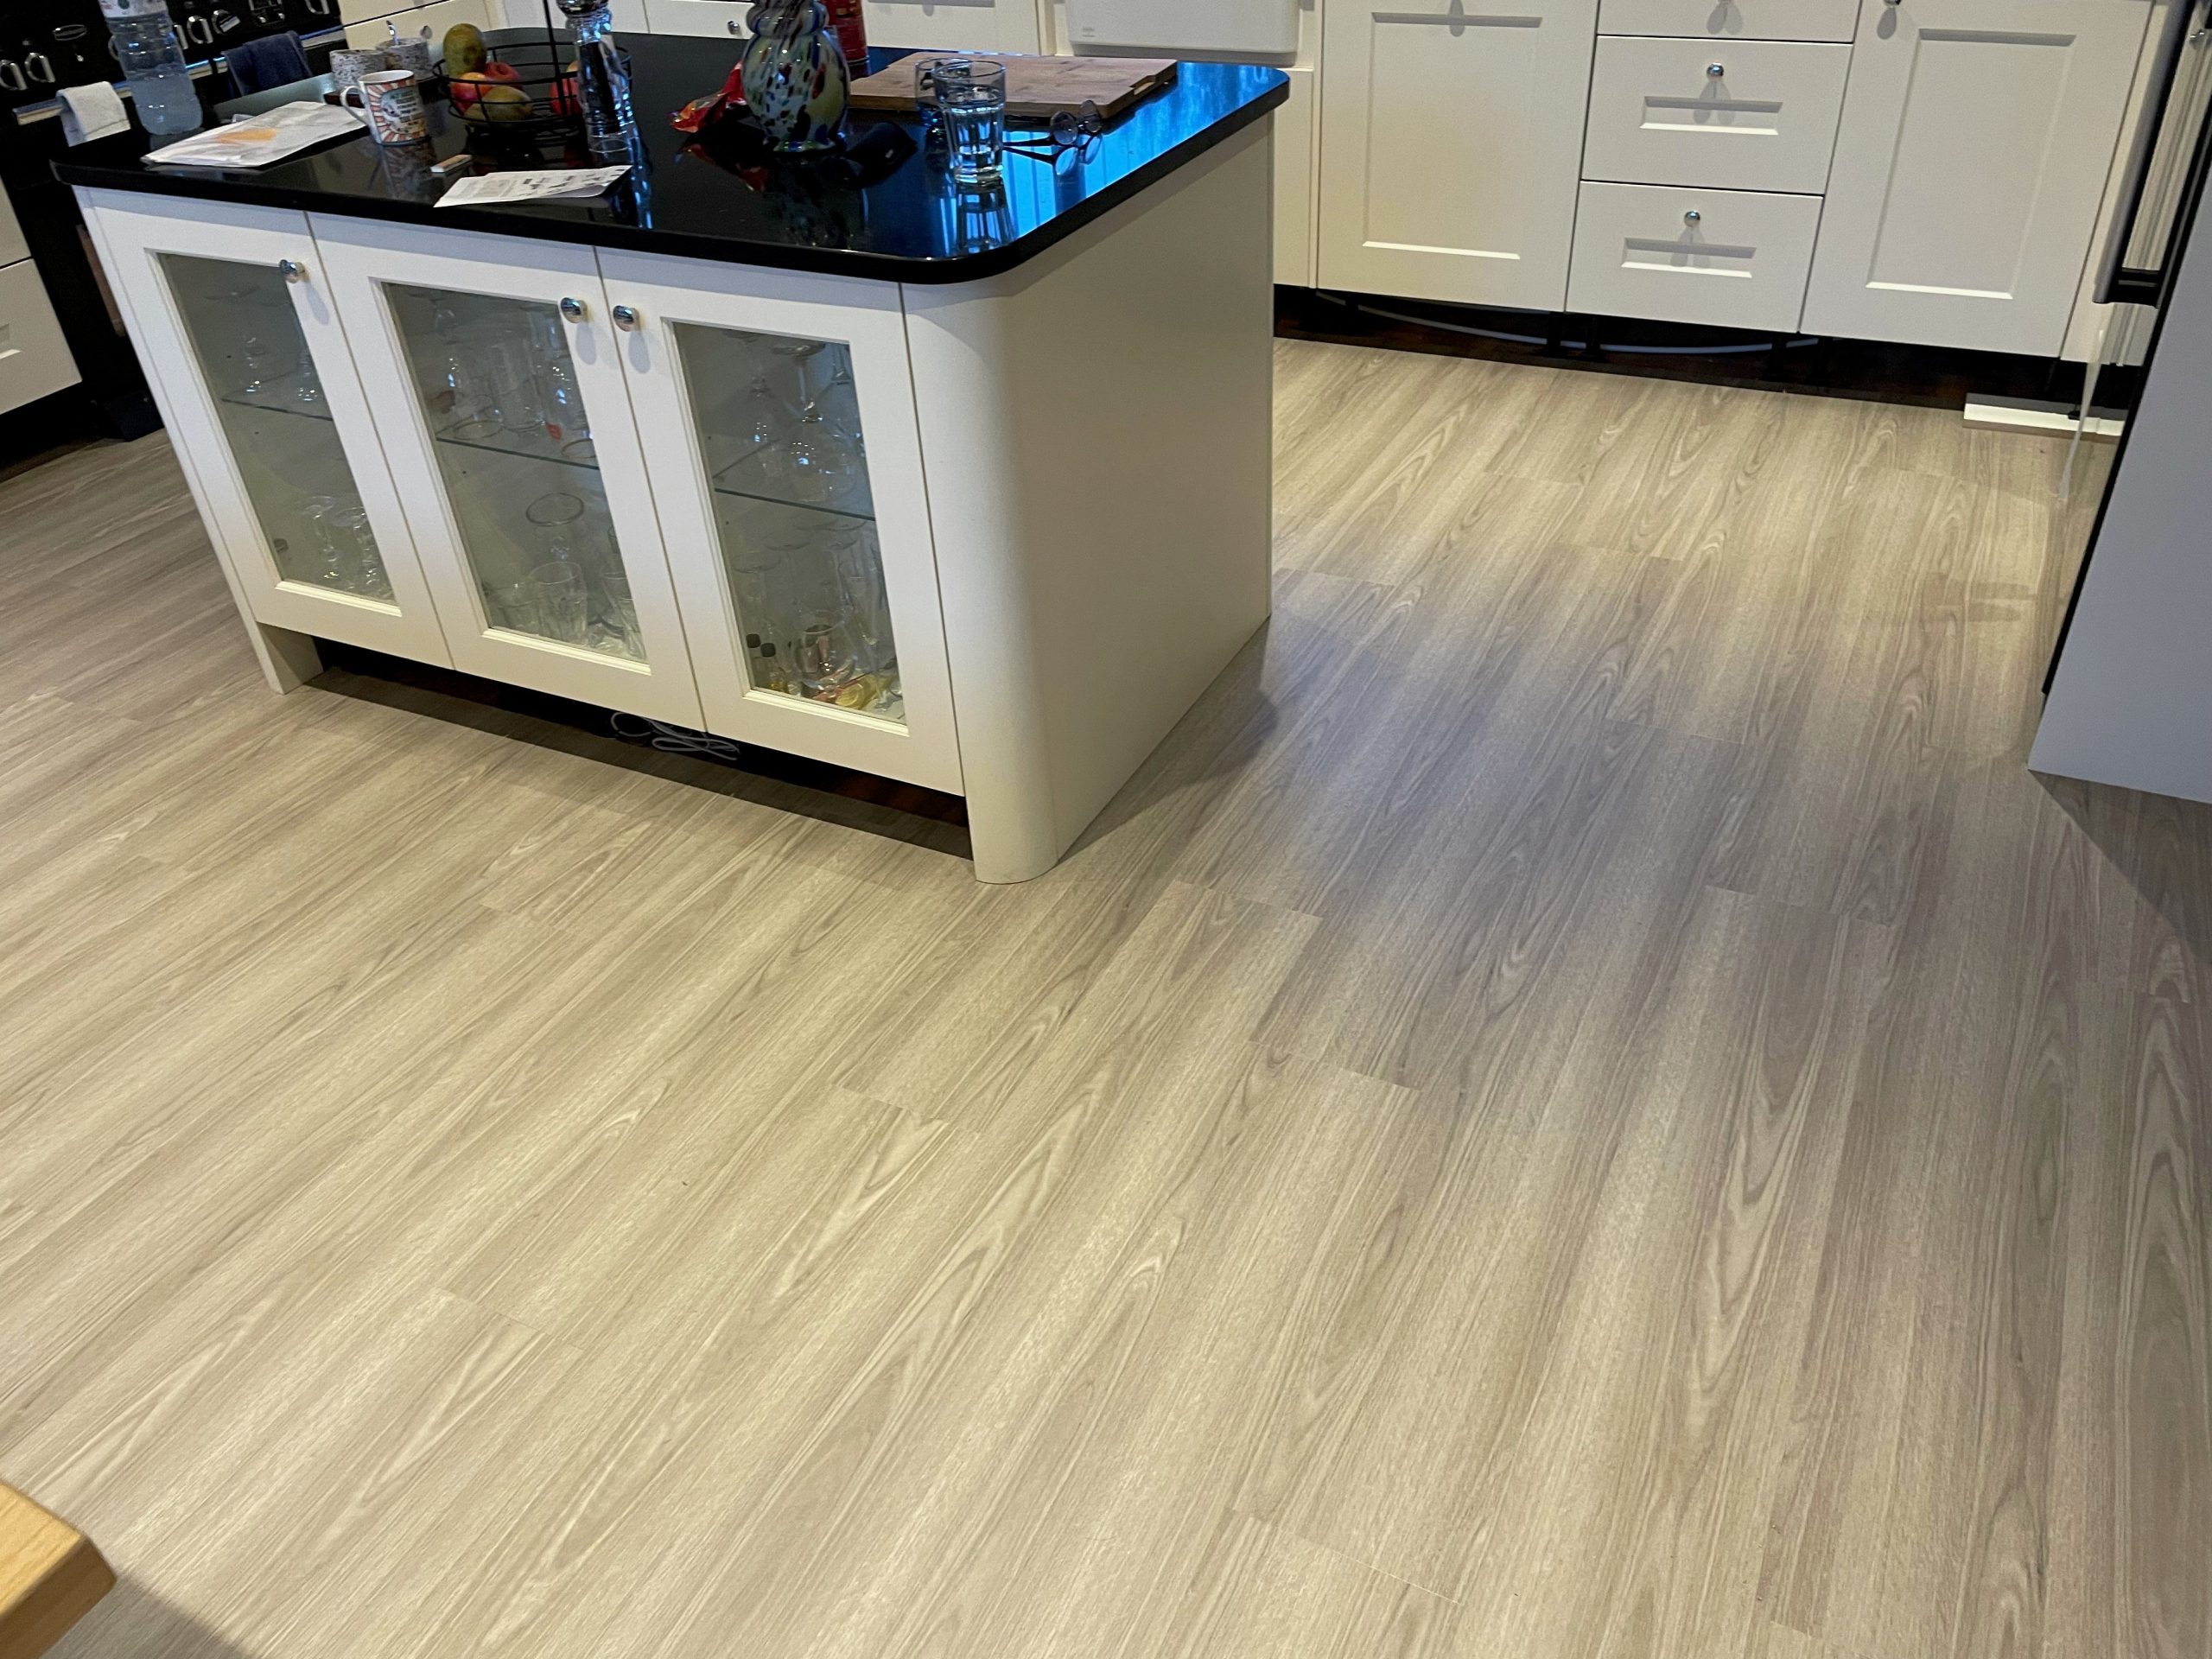 Driftwood Grey Impervia Flooring